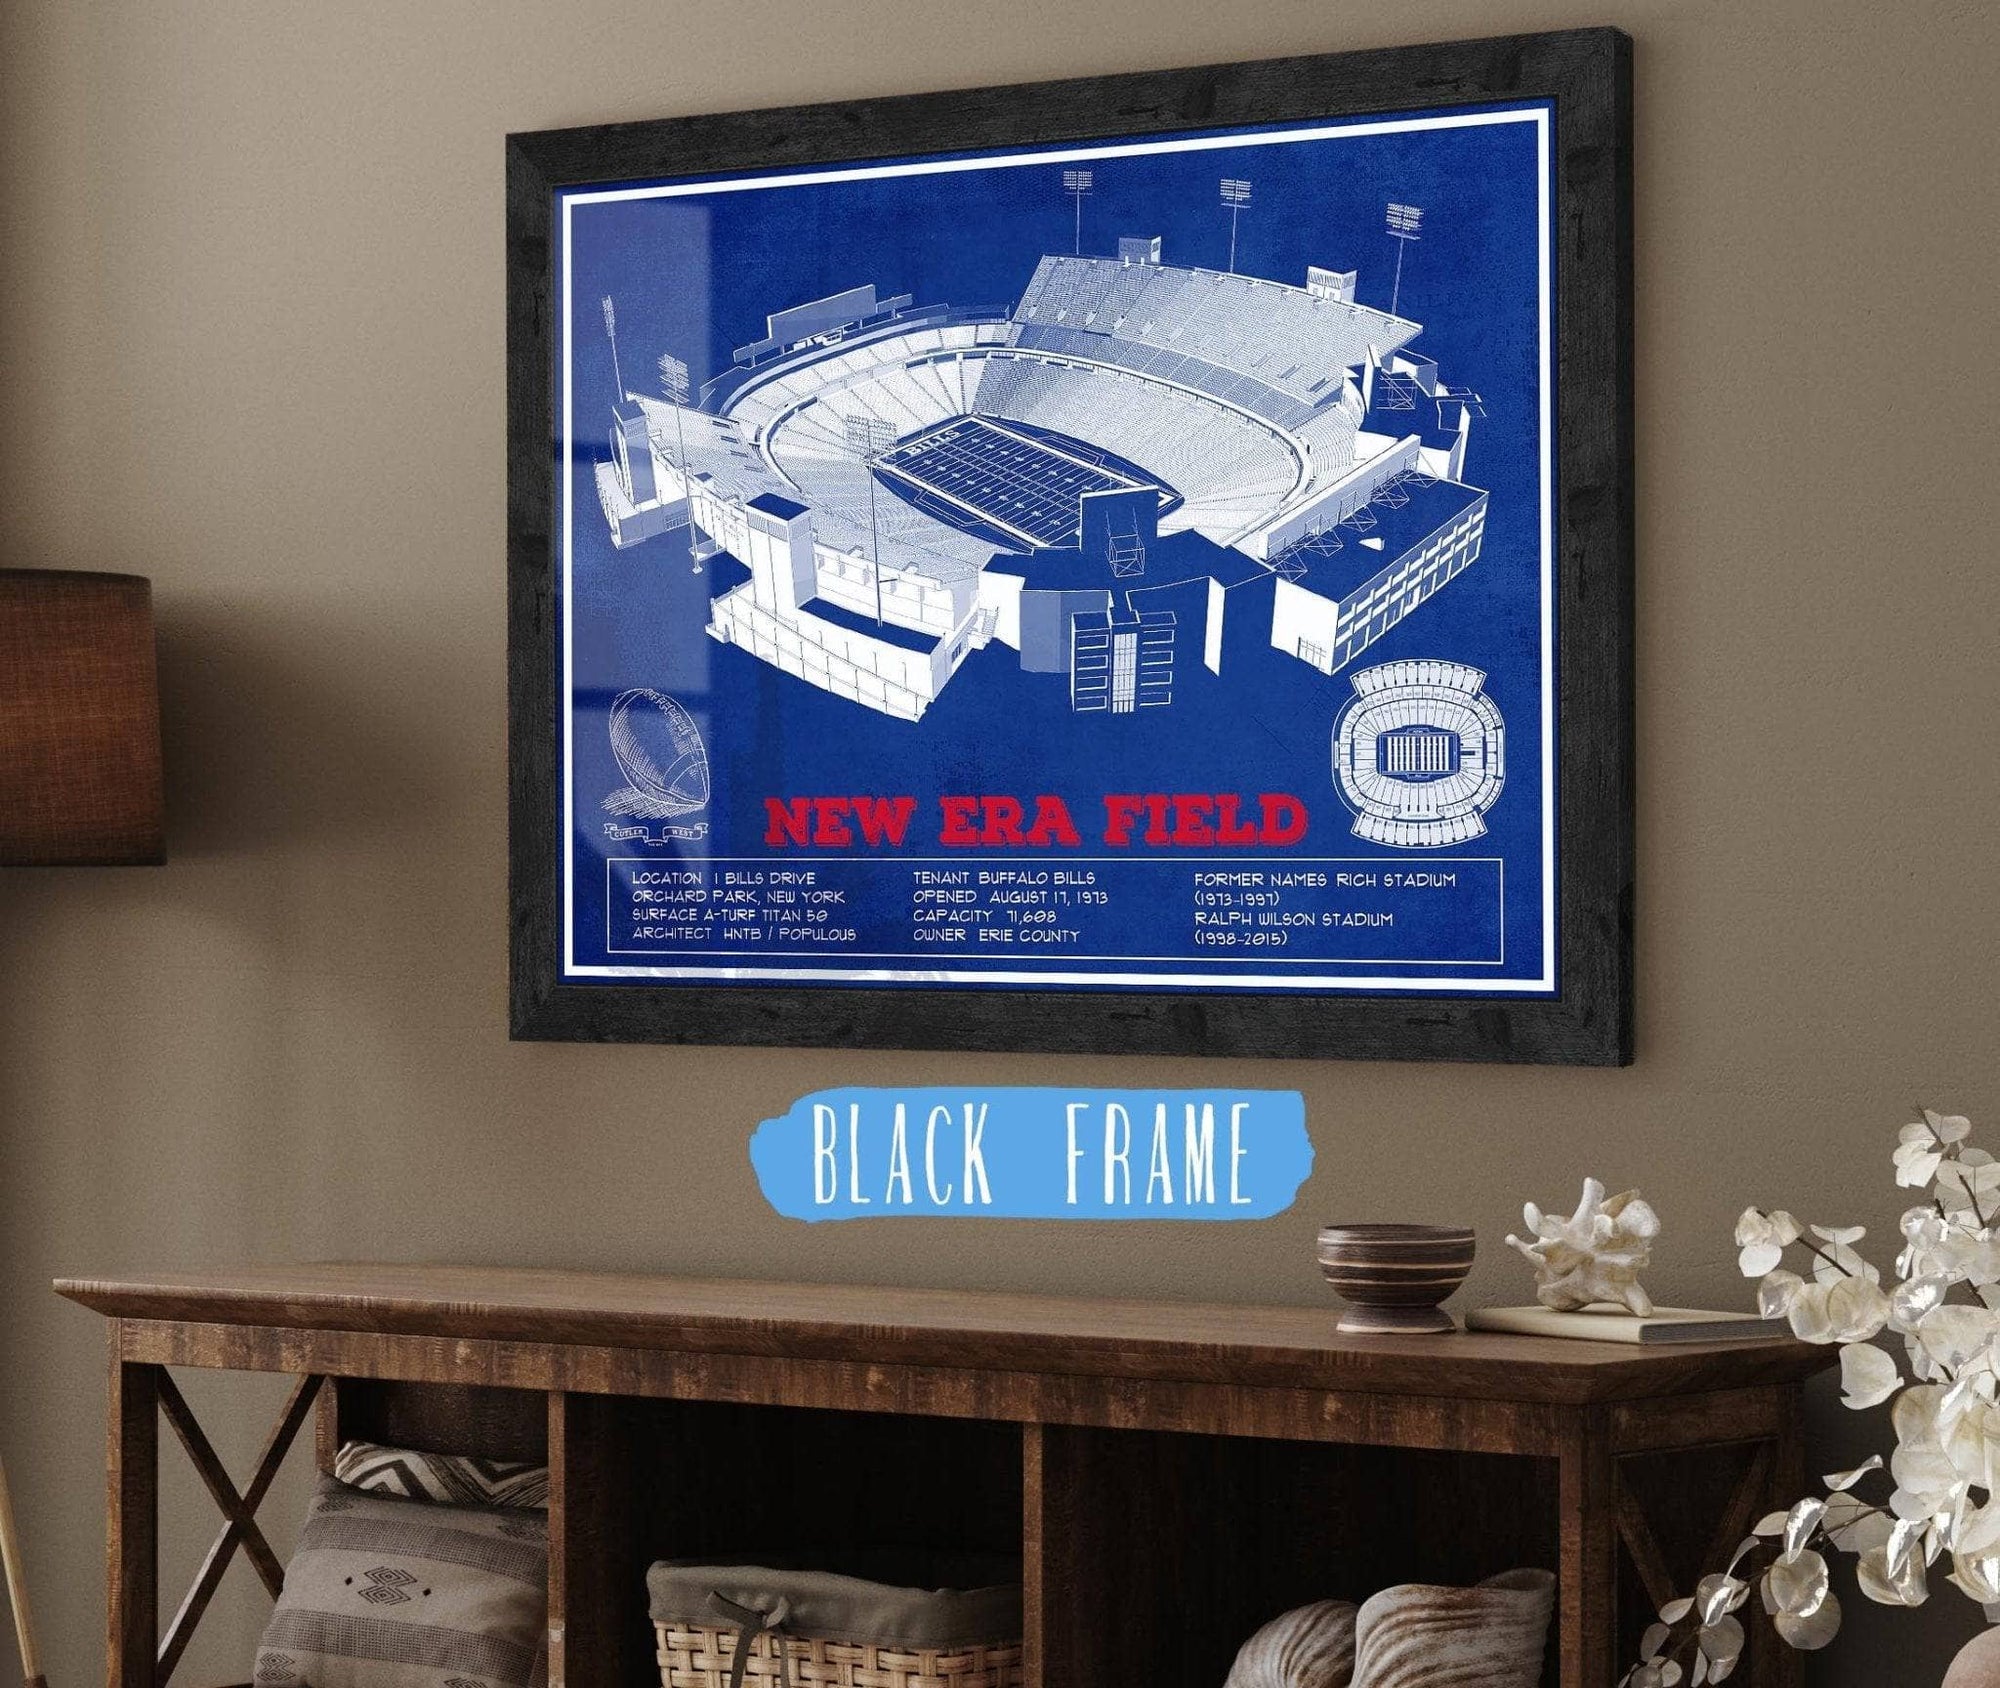 Cutler West Pro Football Collection 14" x 11" / Black Frame New Era Field Buffalo Bills Team Color 698474966-TEAM_71682